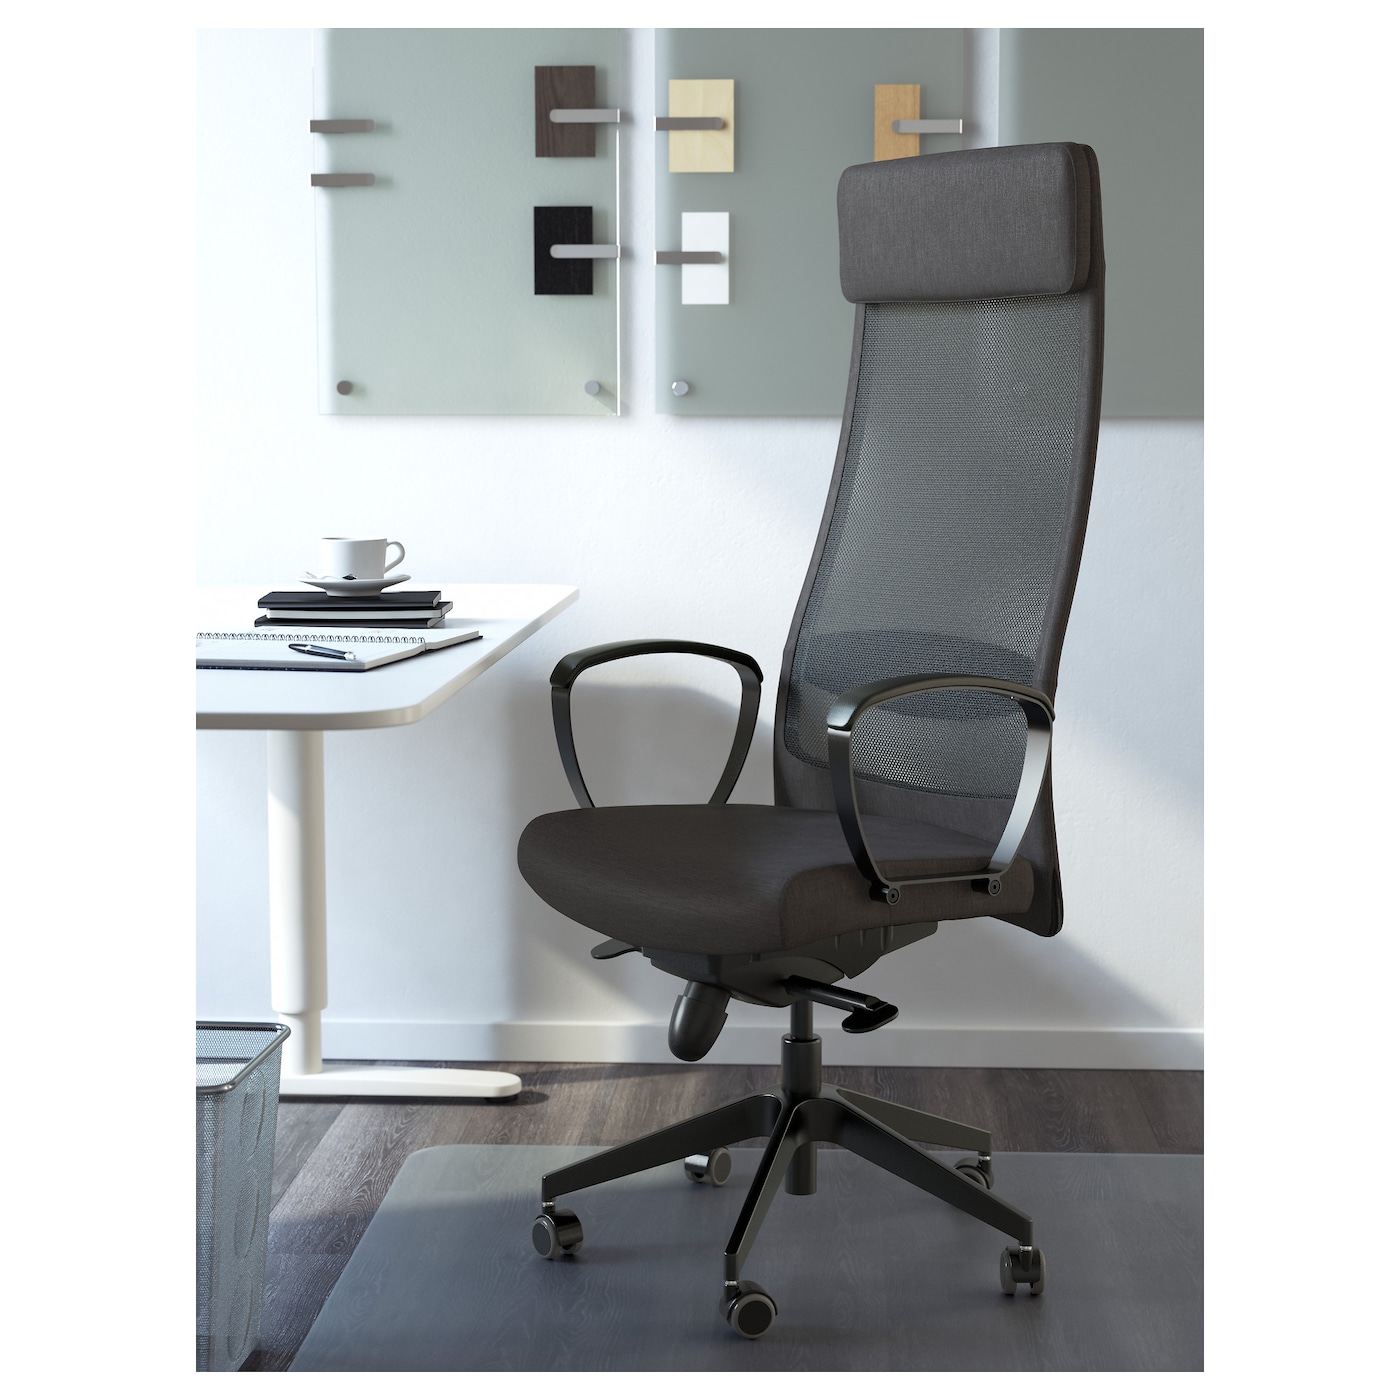 markus-office-chair-vissle-dark-gray__0399810_pe563882_s5.jpg